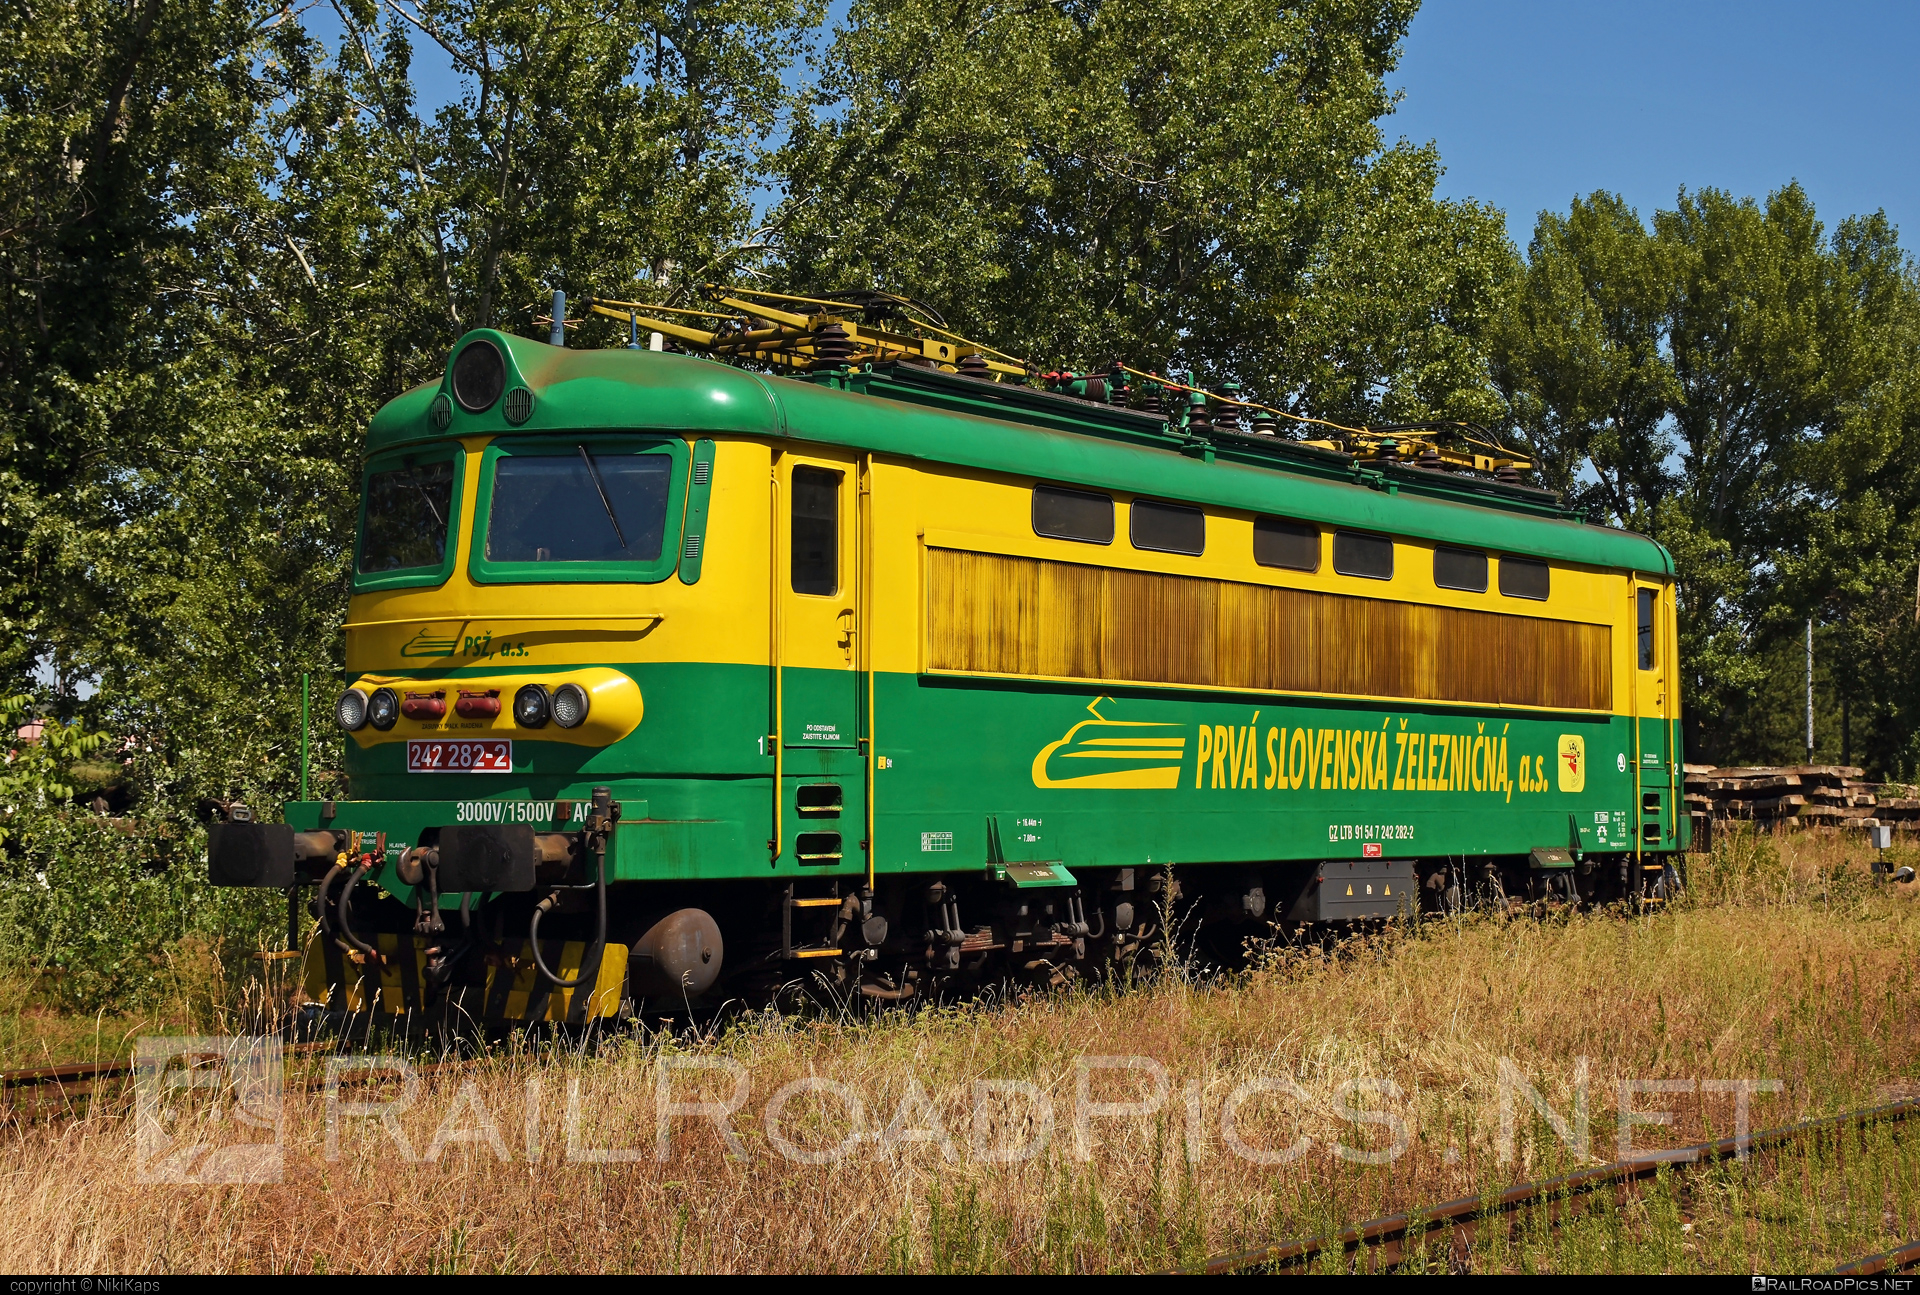 Škoda 73E - 242 282-2 operated by Prvá Slovenská železničná, a.s. #locomotive242 #plechac #prvaslovenskazeleznicna #prvaslovenskazeleznicnaas #psz #skoda #skoda73e